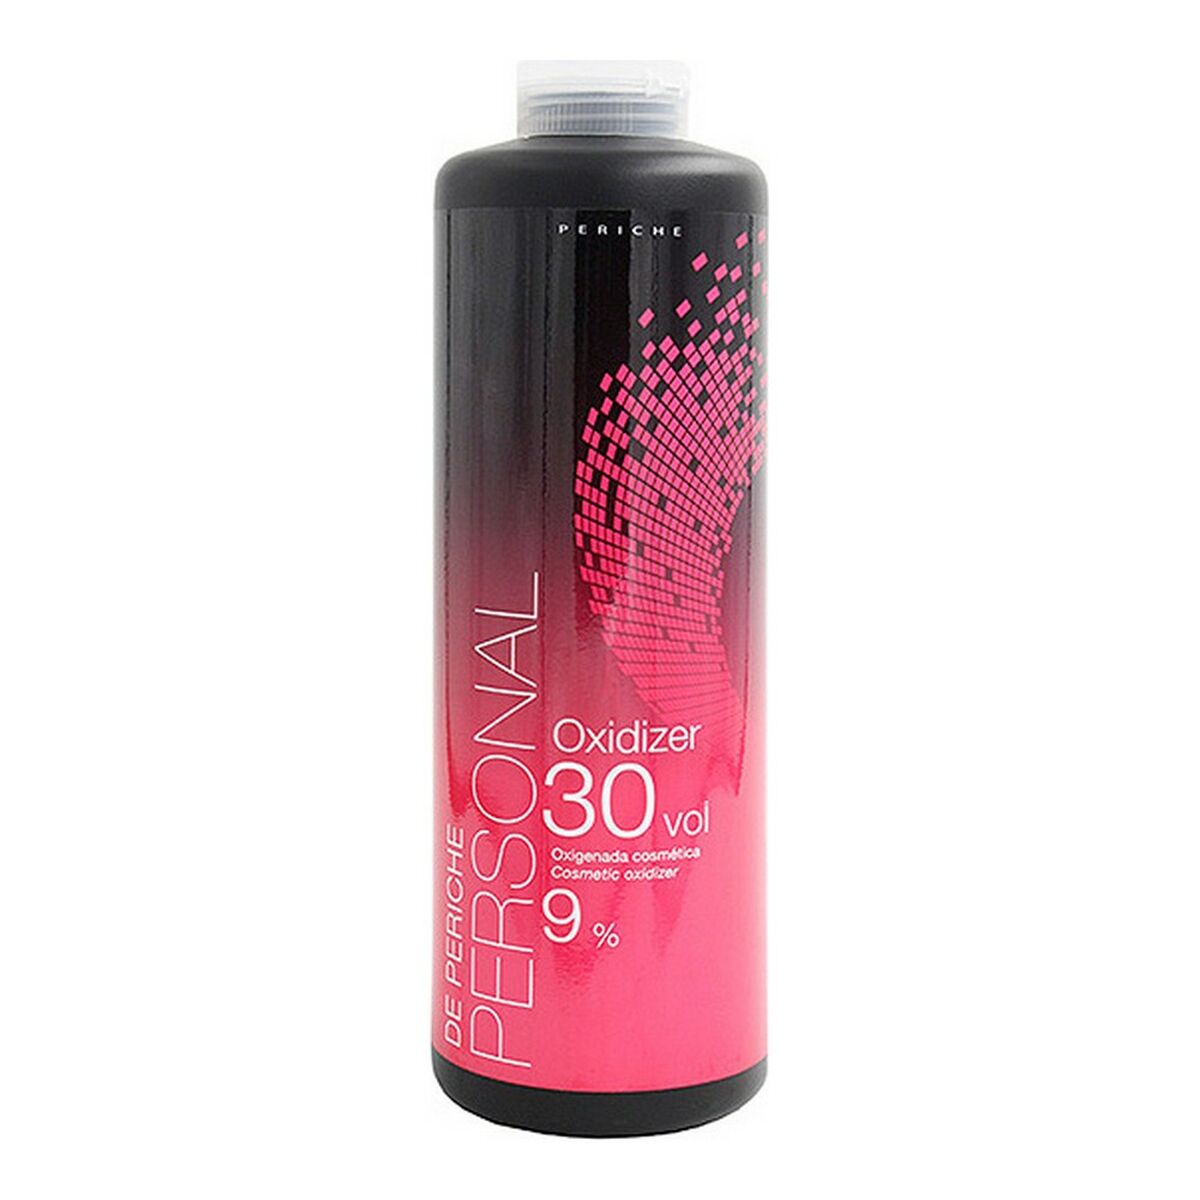 Hair Oxidizer Periche Oxid 9% 30 vol 9 % (950 ml) | Periche | Aylal Beauty